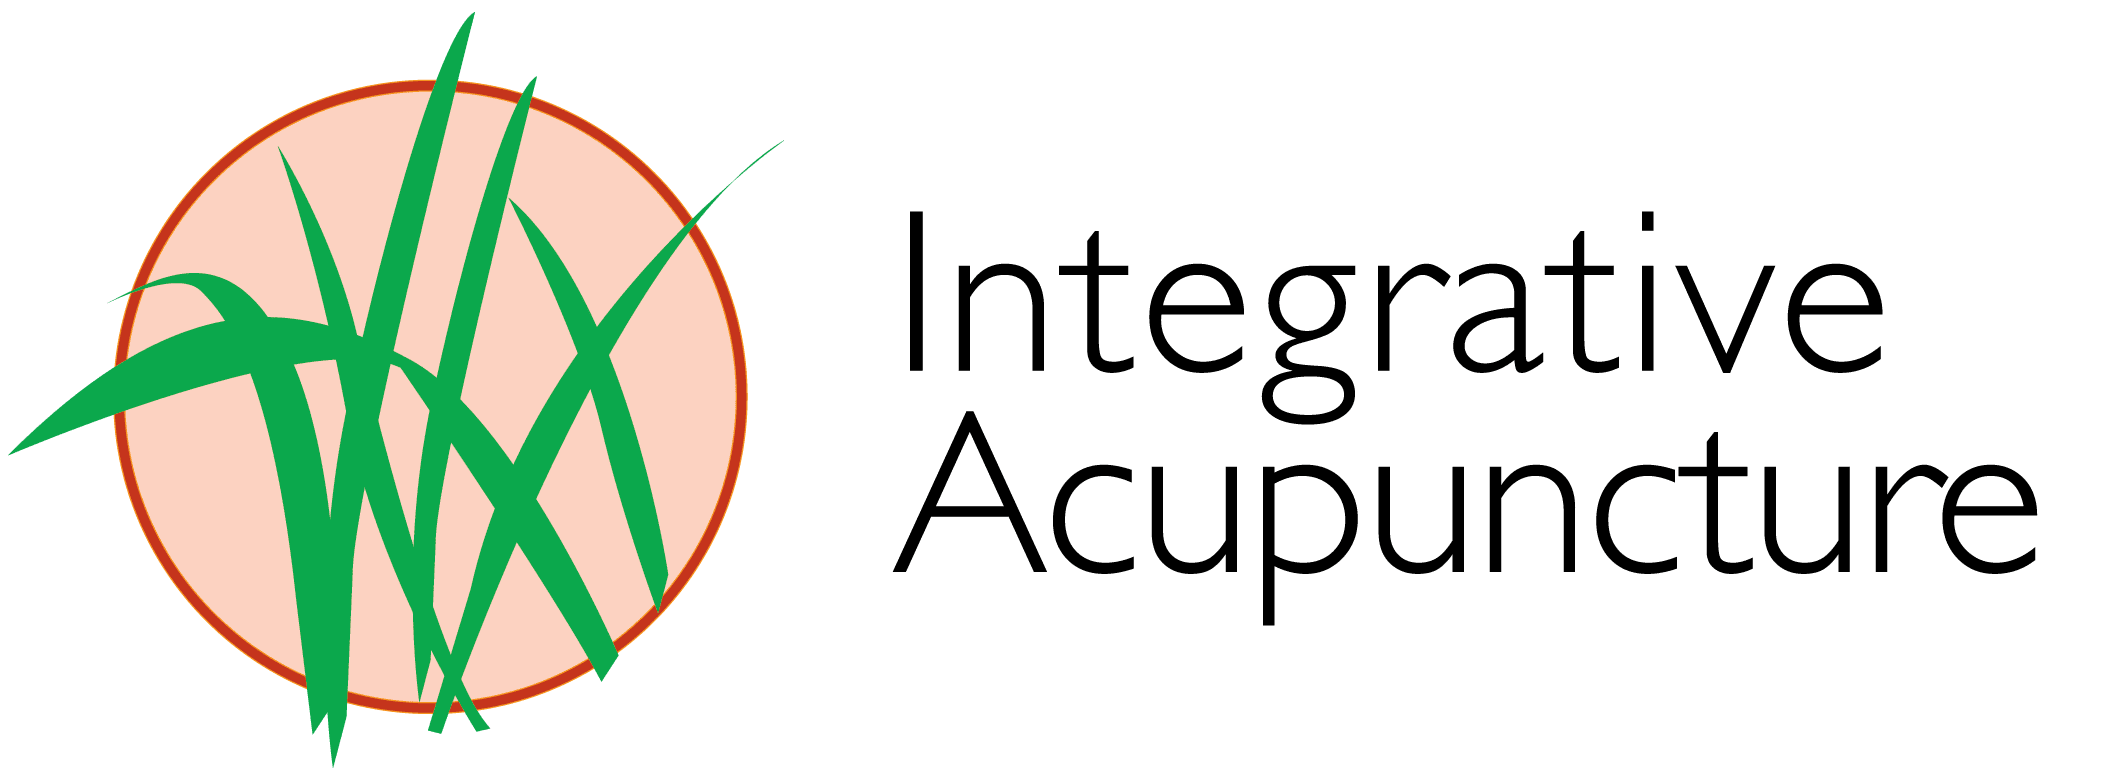 Integrative Acupuncture Logo